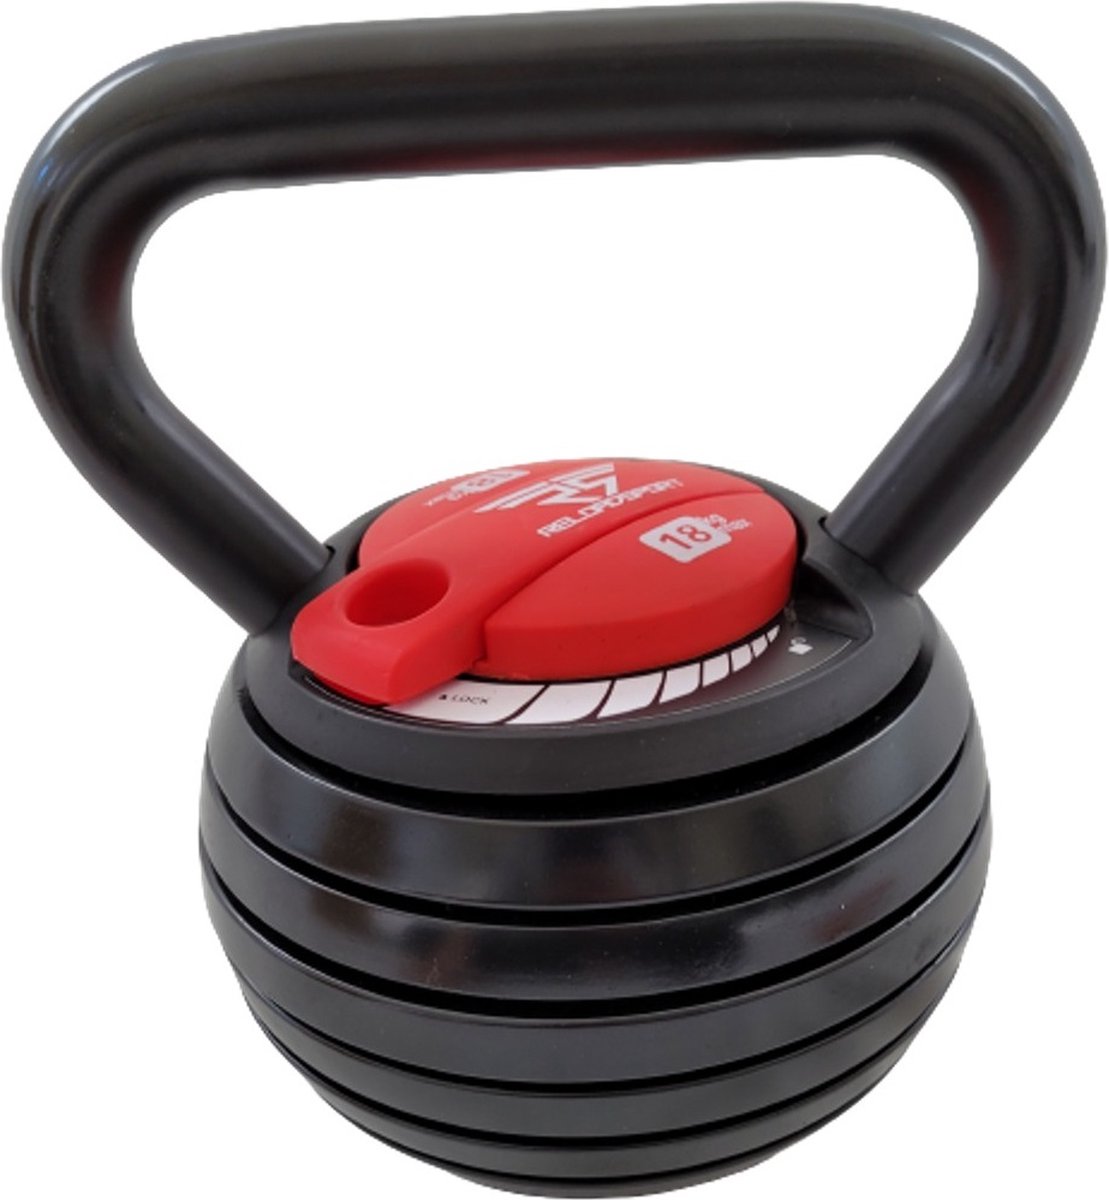 ReloadSport - Verstelbare kettlebell - 18KG - Adjustable - Fitness - Kettlebell - Sportief - Keastcadeau